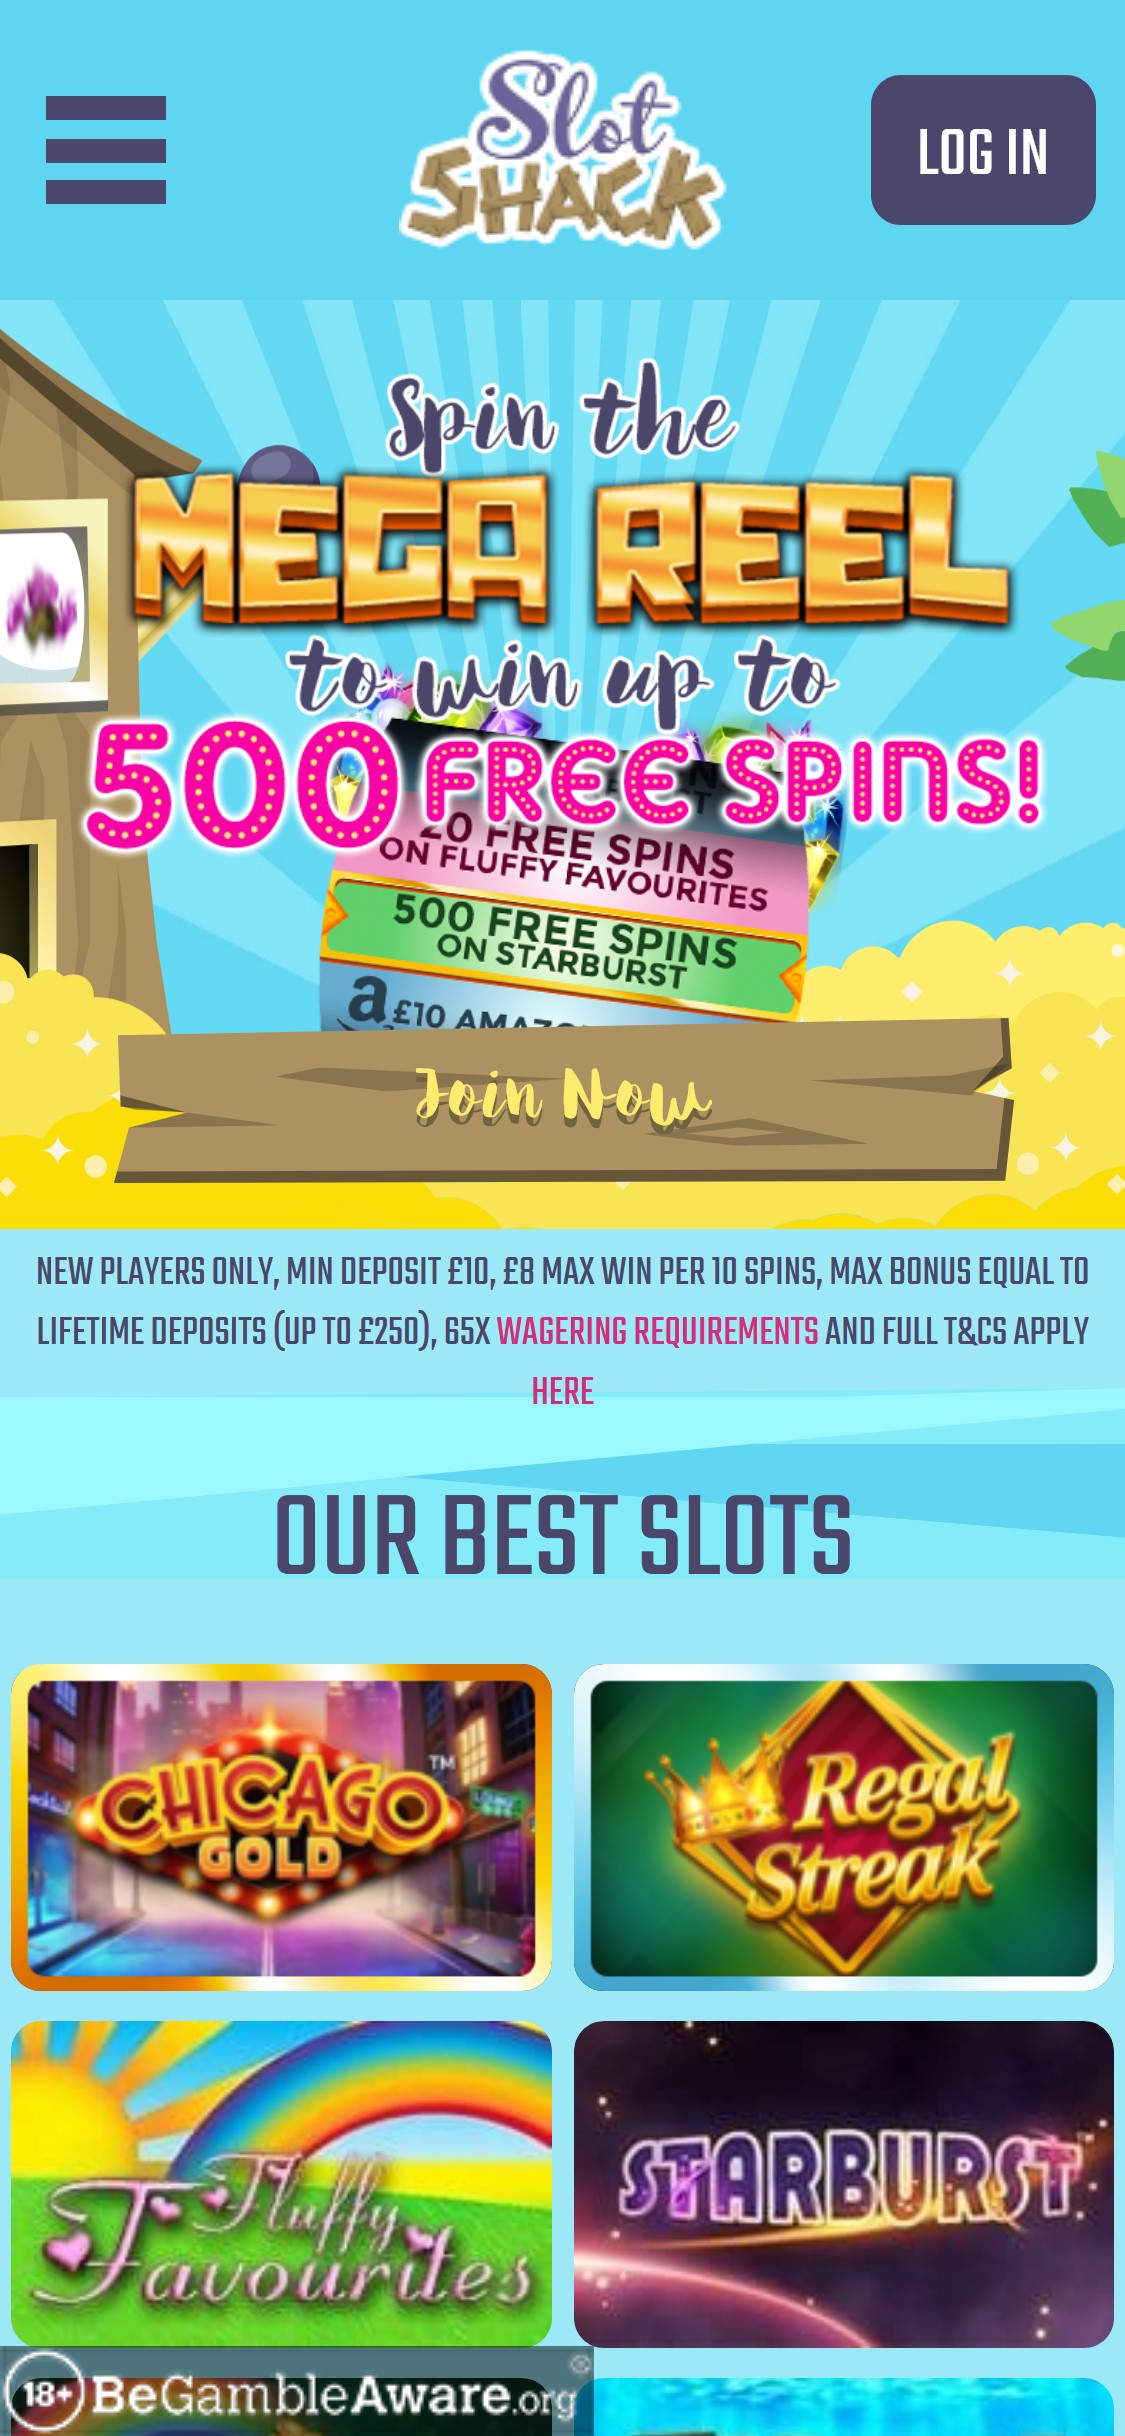 Slot Shack Casino Mobile Review